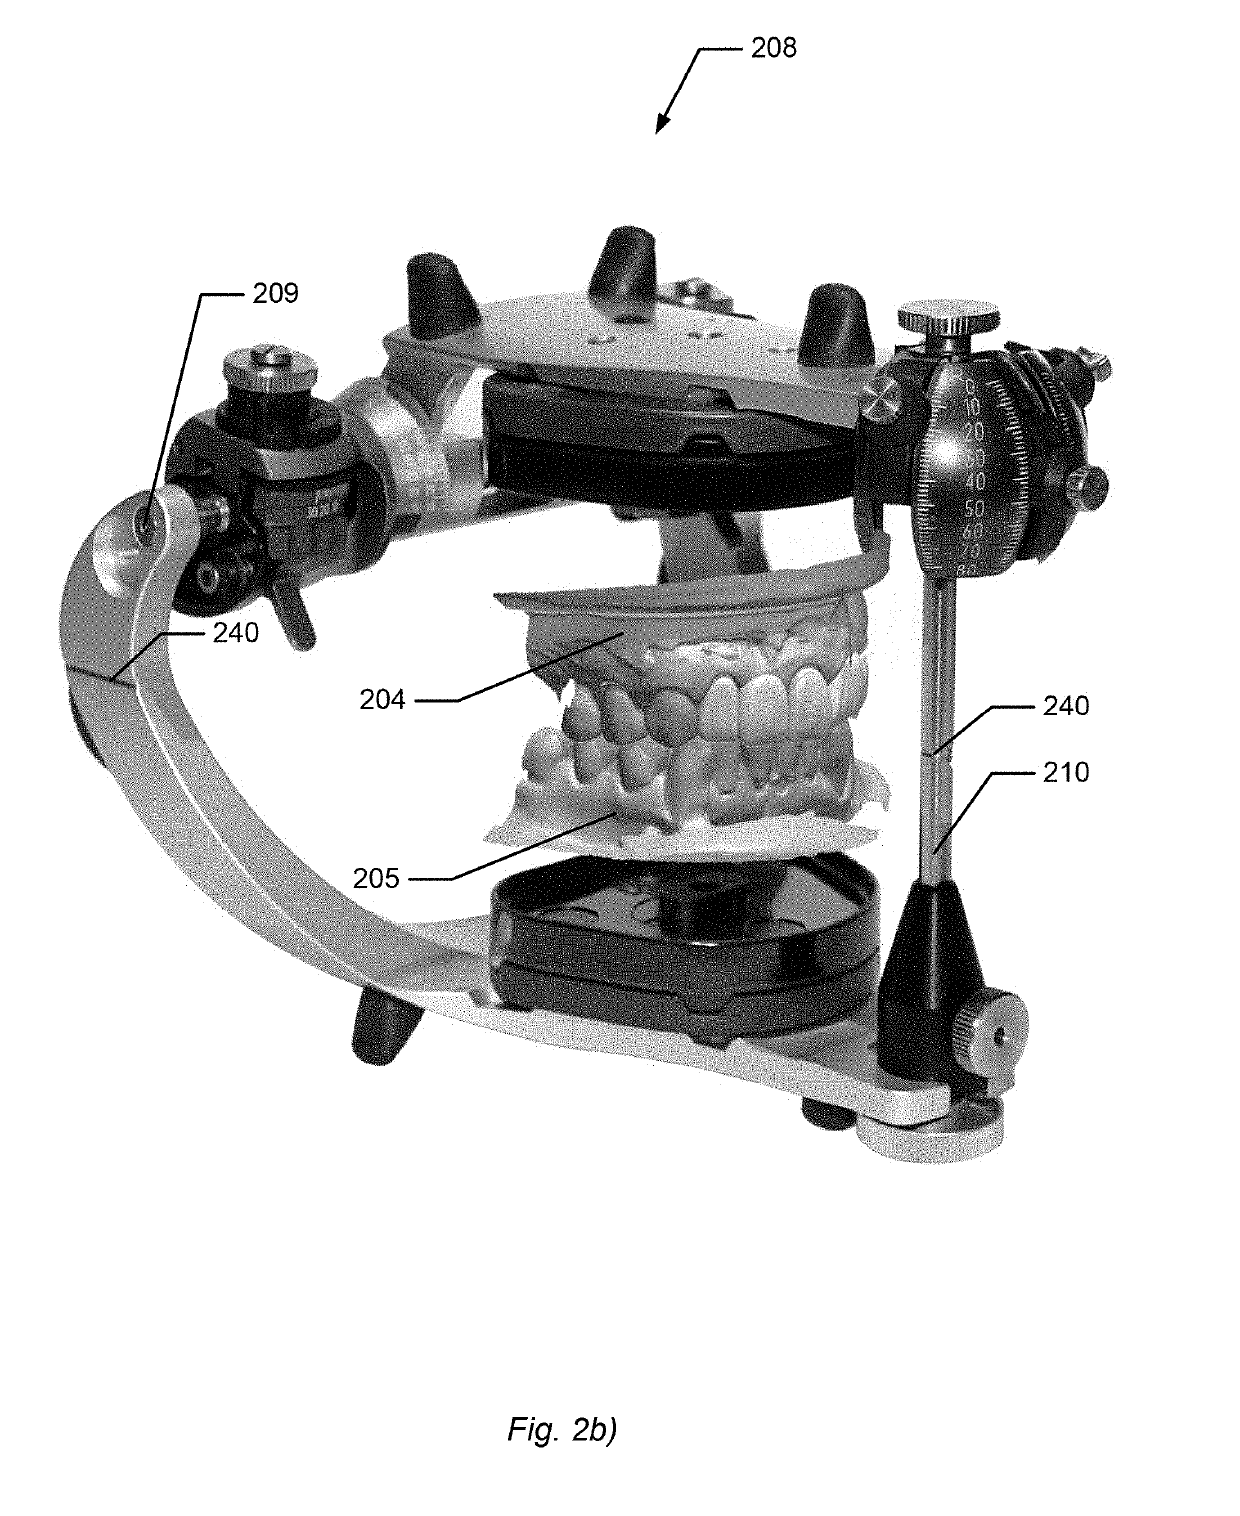 Dynamic virtual articulator for simulating occlusion of teeth